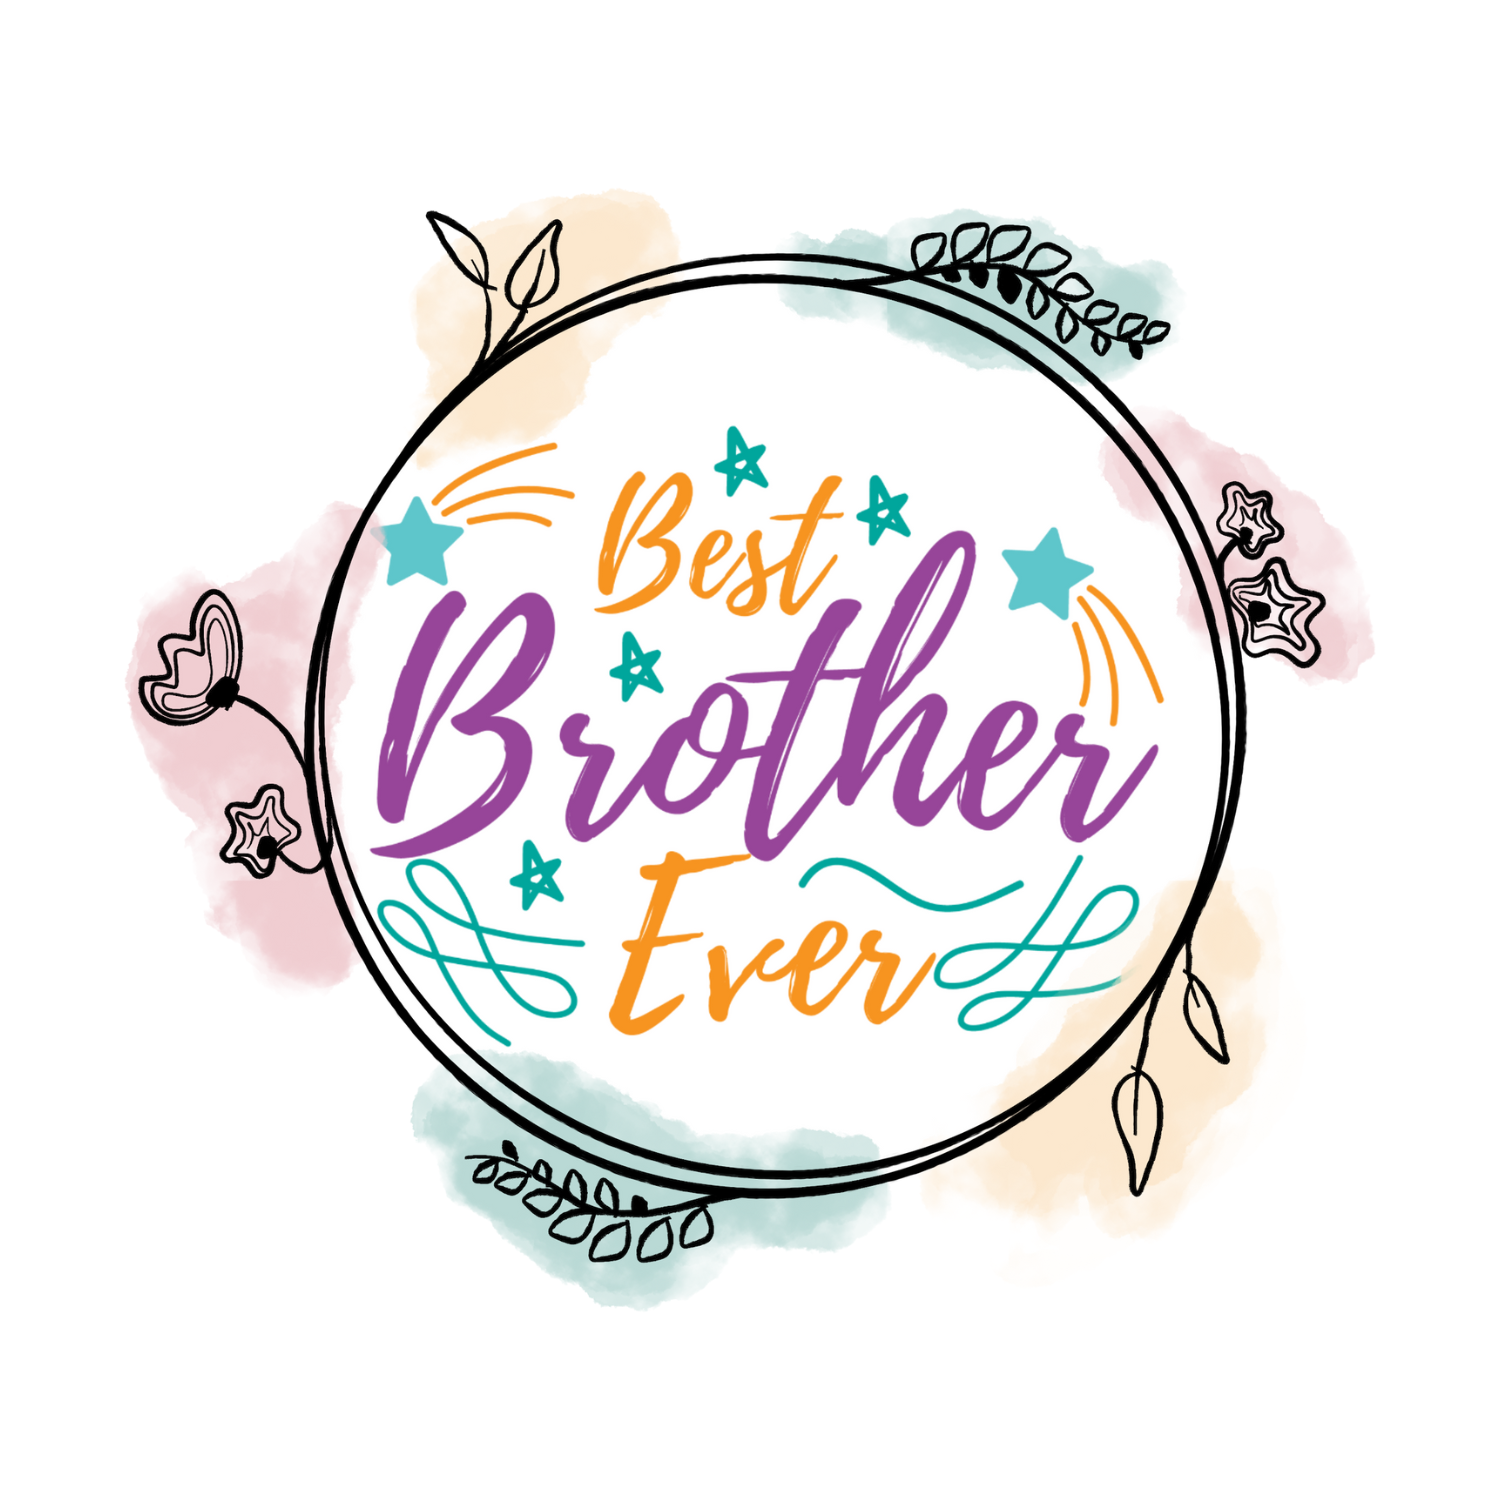 BEST BROTHER EVER SVG | Digital Download | Cut File | SVG - Only The Sweet Stuff